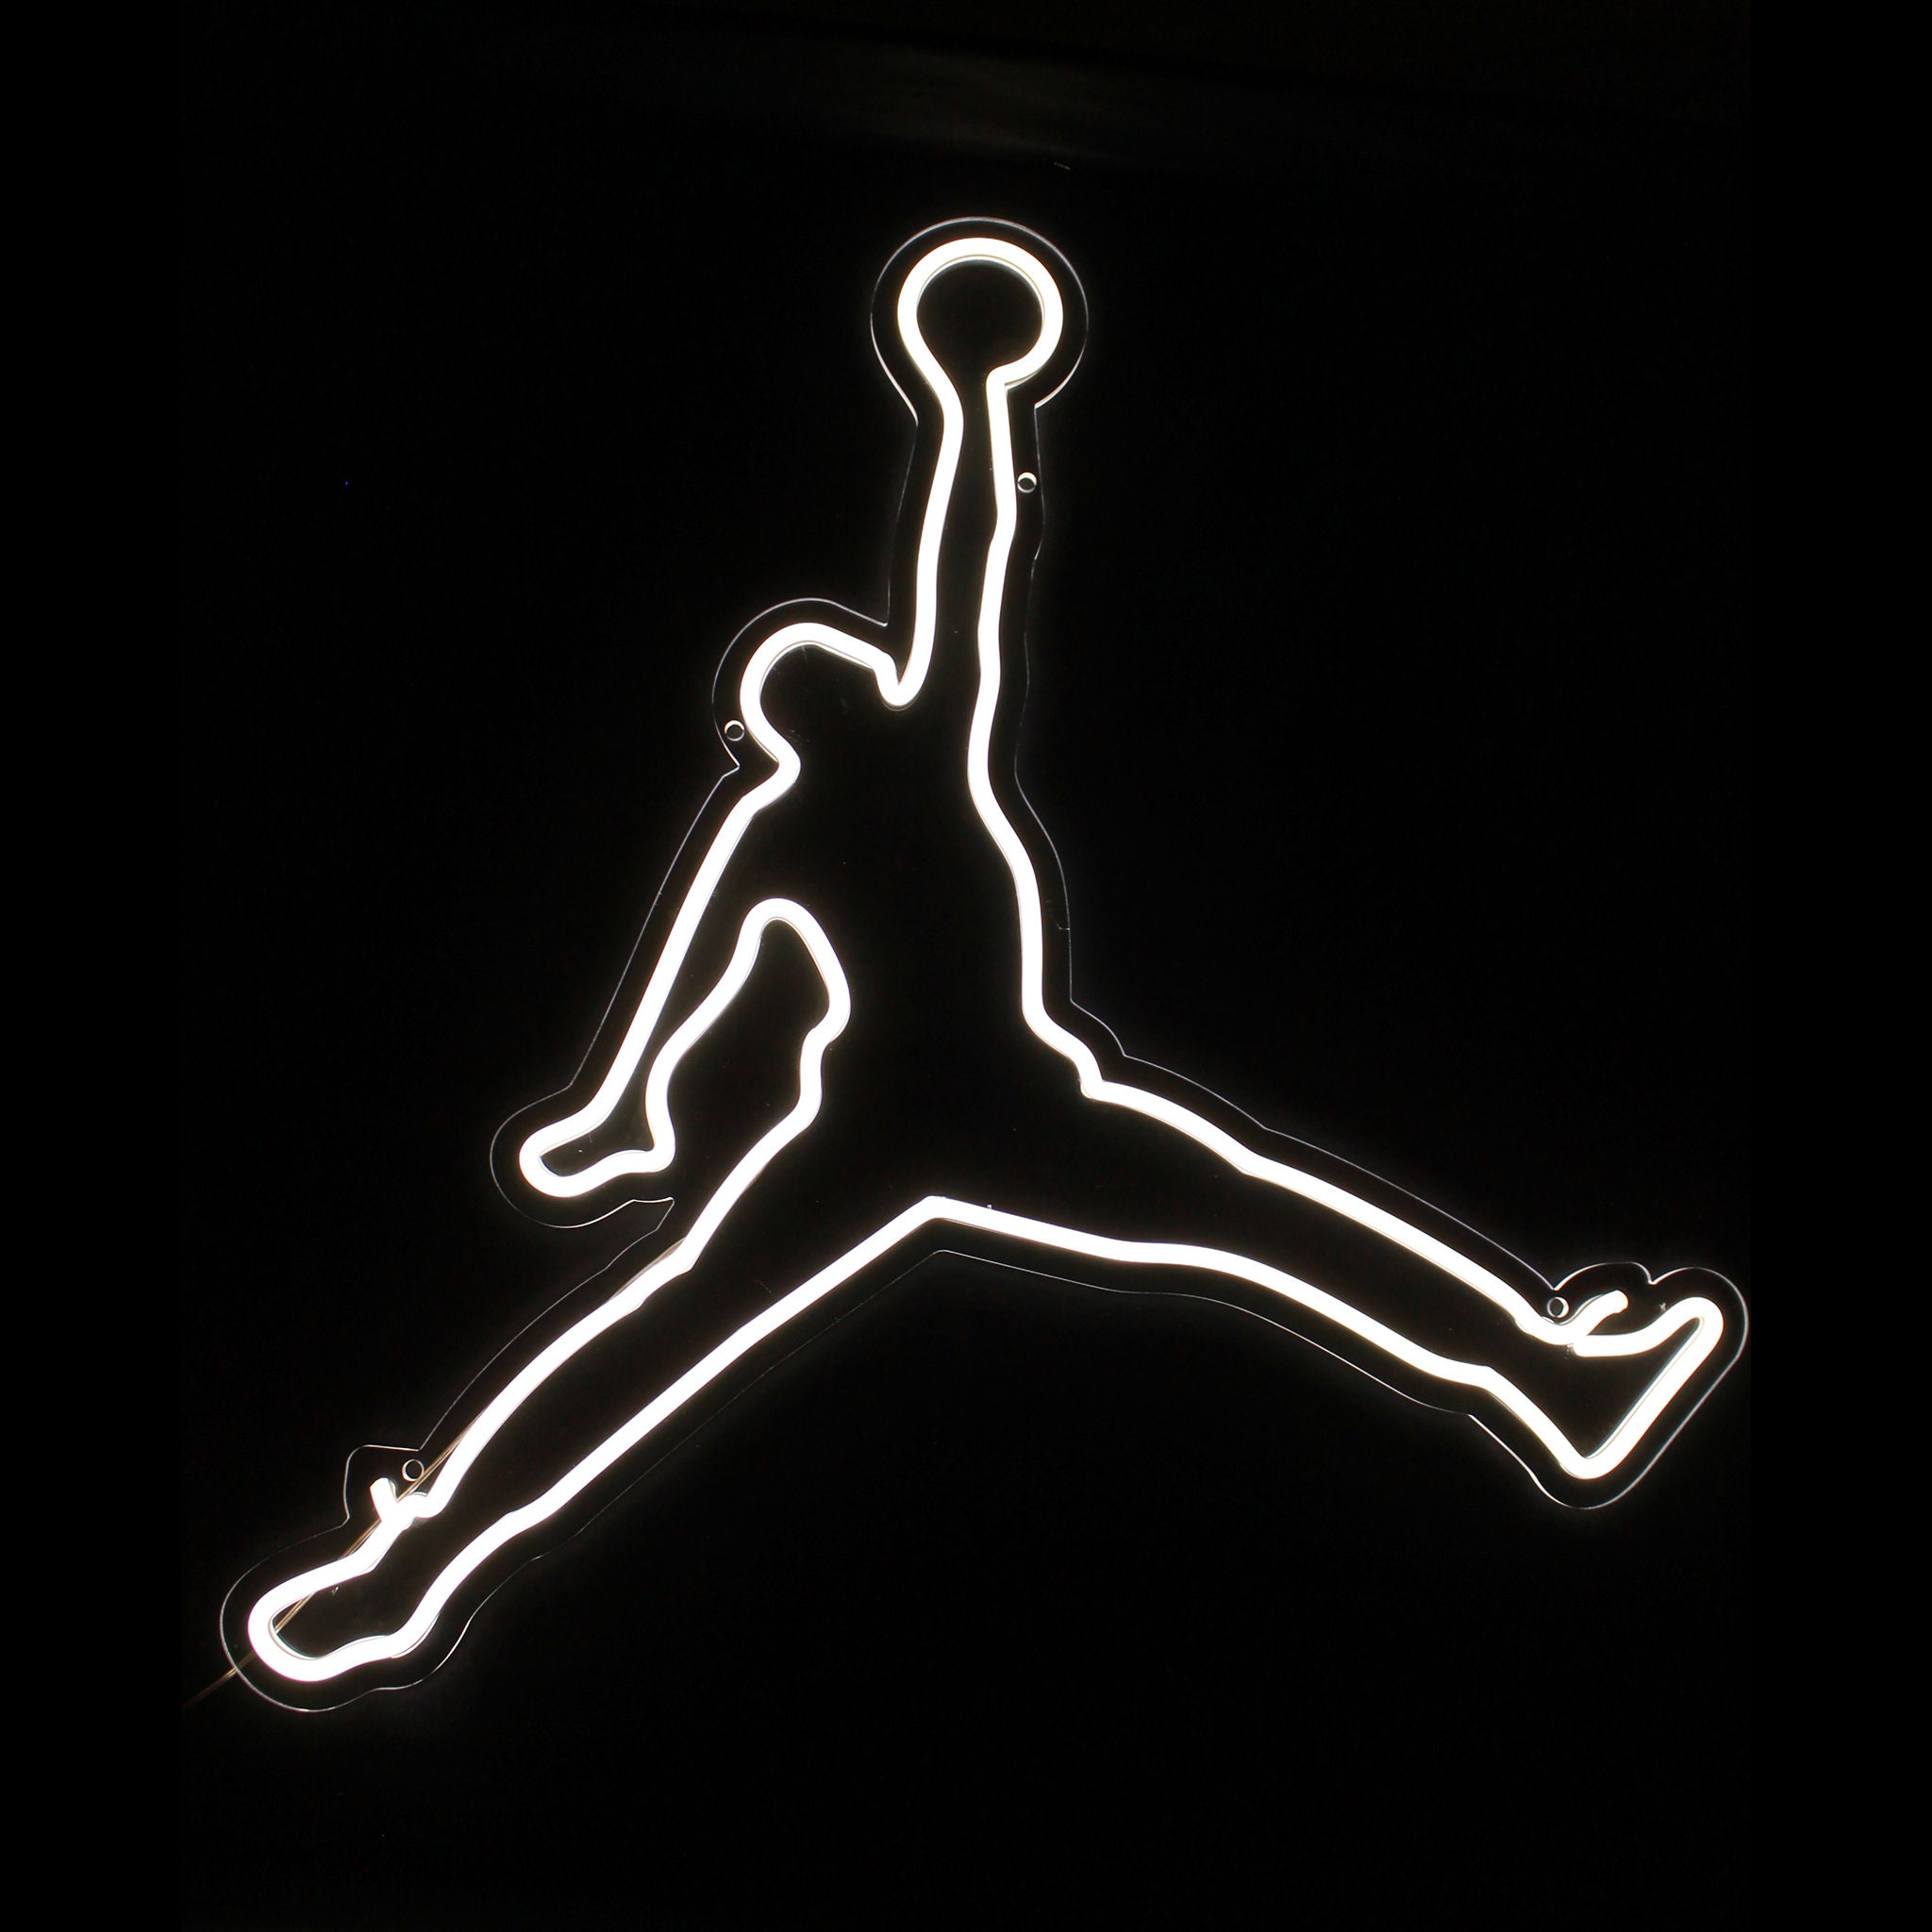 Air Jordan Led NEON Sign 75cm - Etsy 